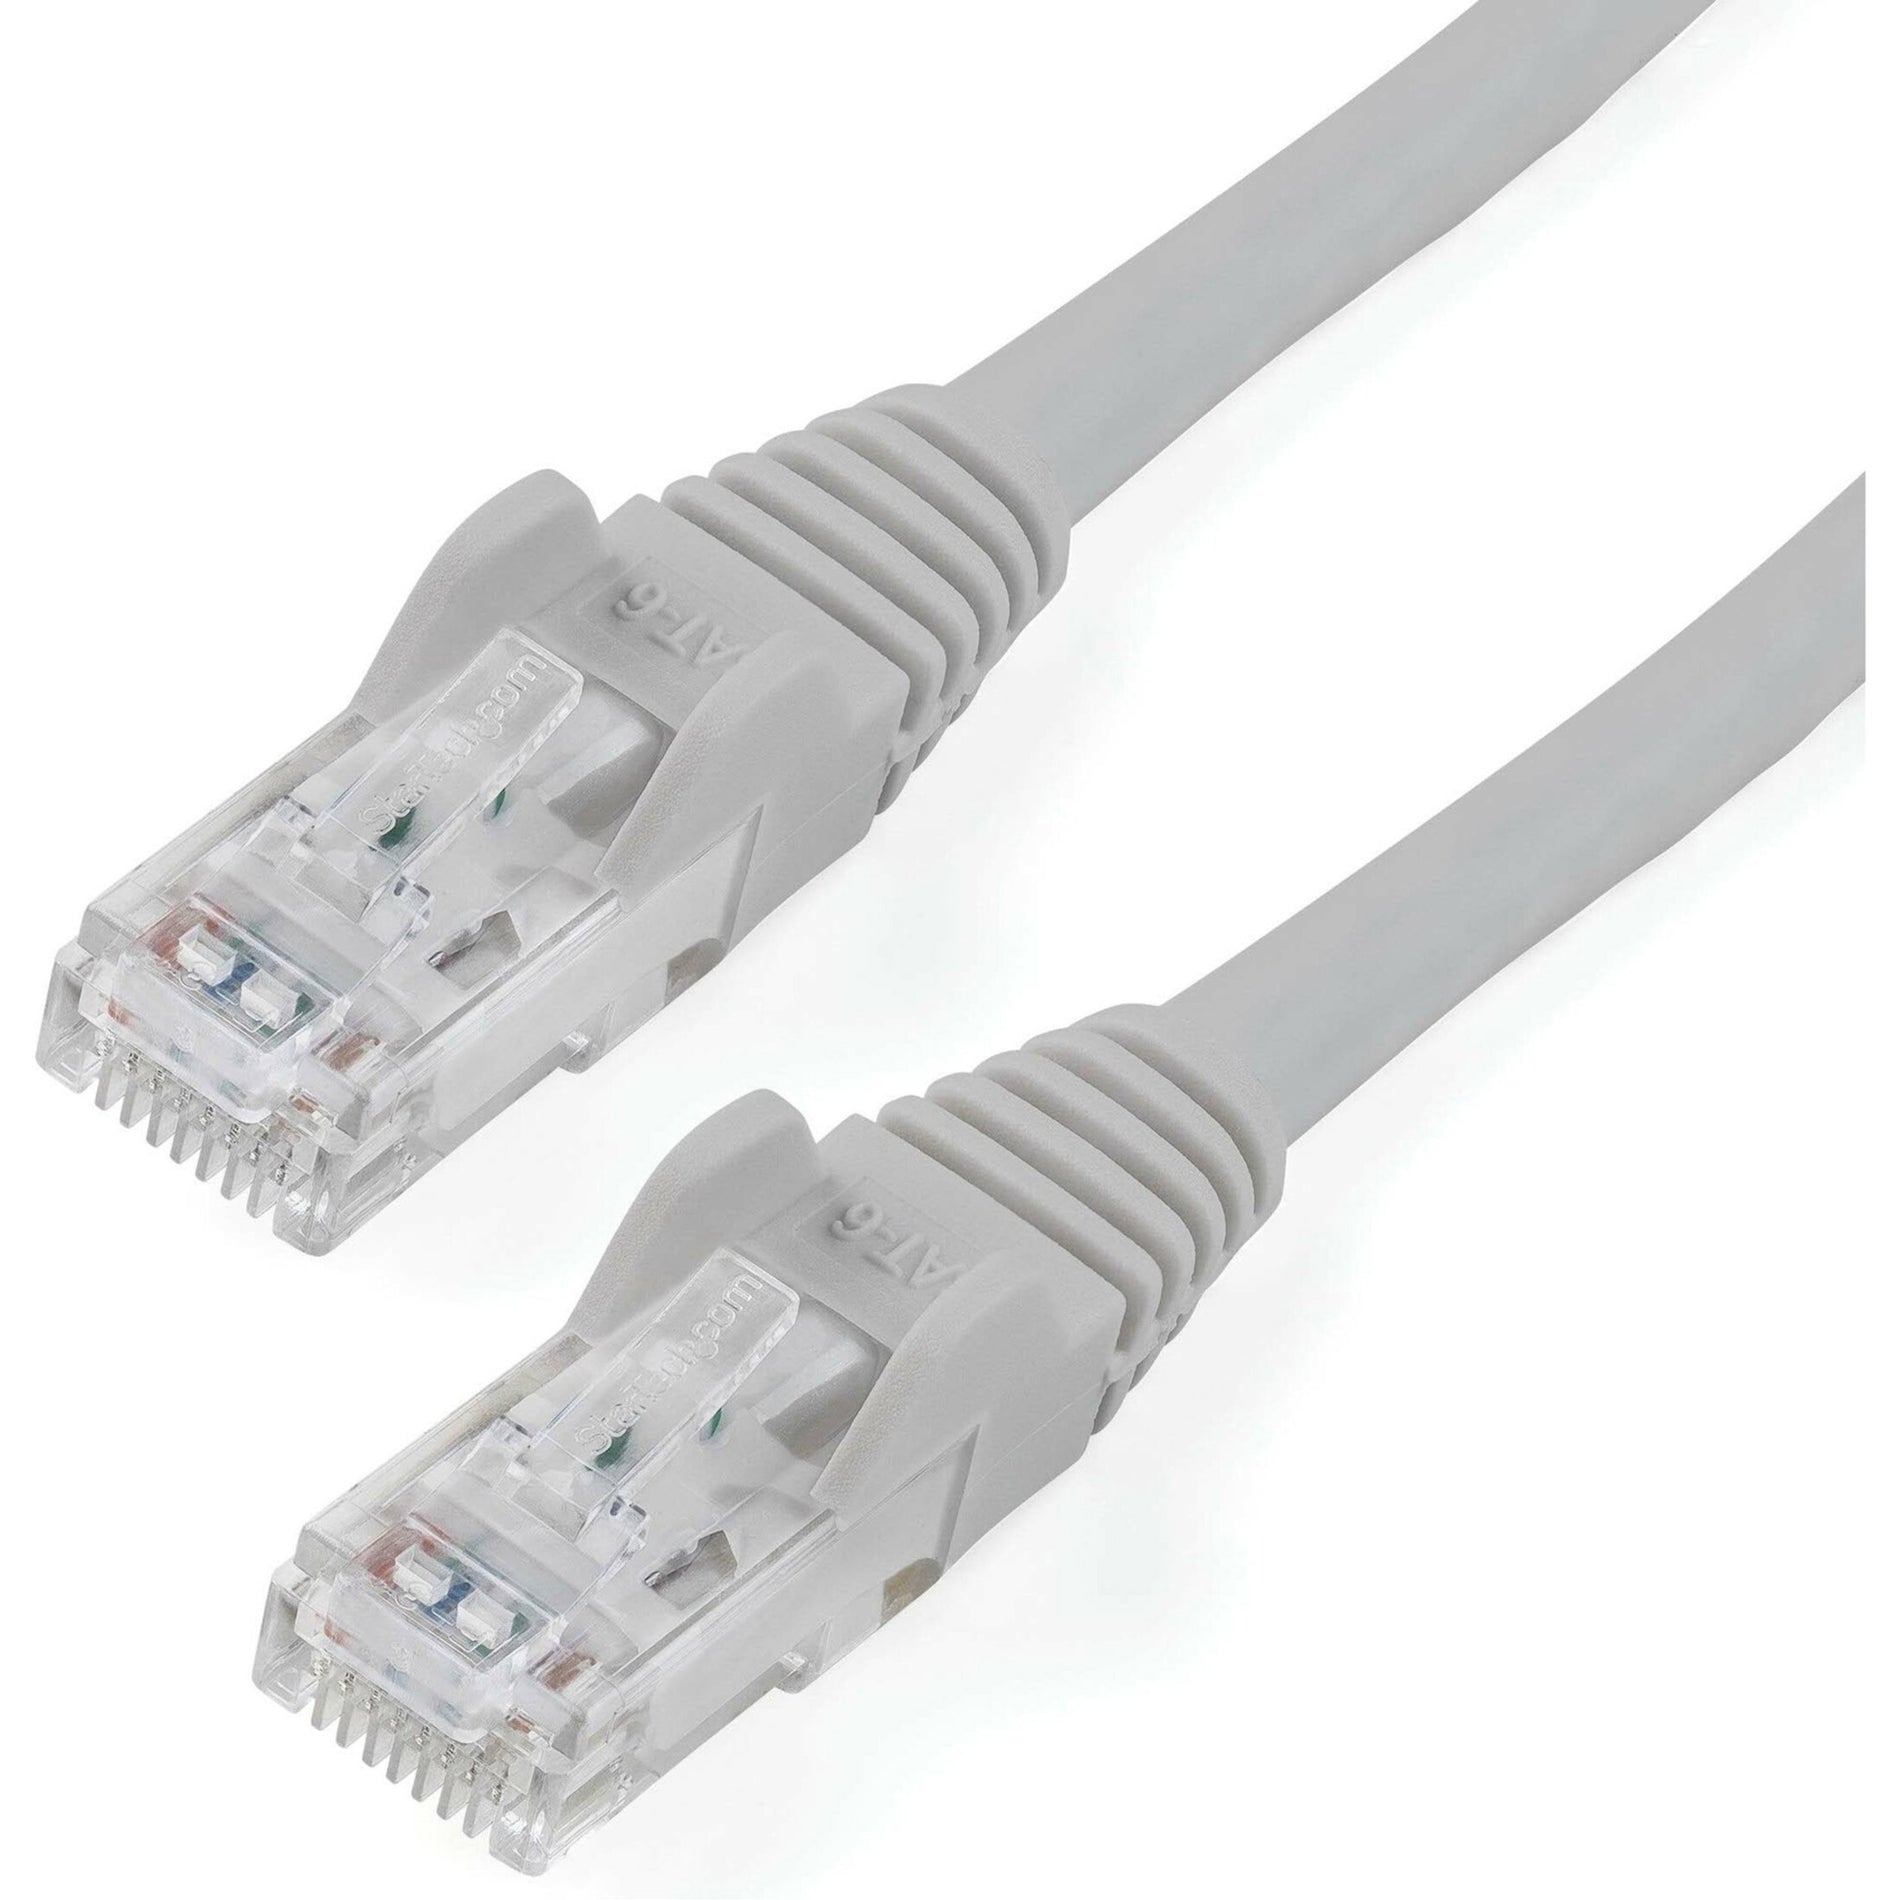 StarTech.com N6PATCH4GR Cat6 Patch Cable, 4ft Gray Ethernet Cable, Snagless RJ45 Connectors